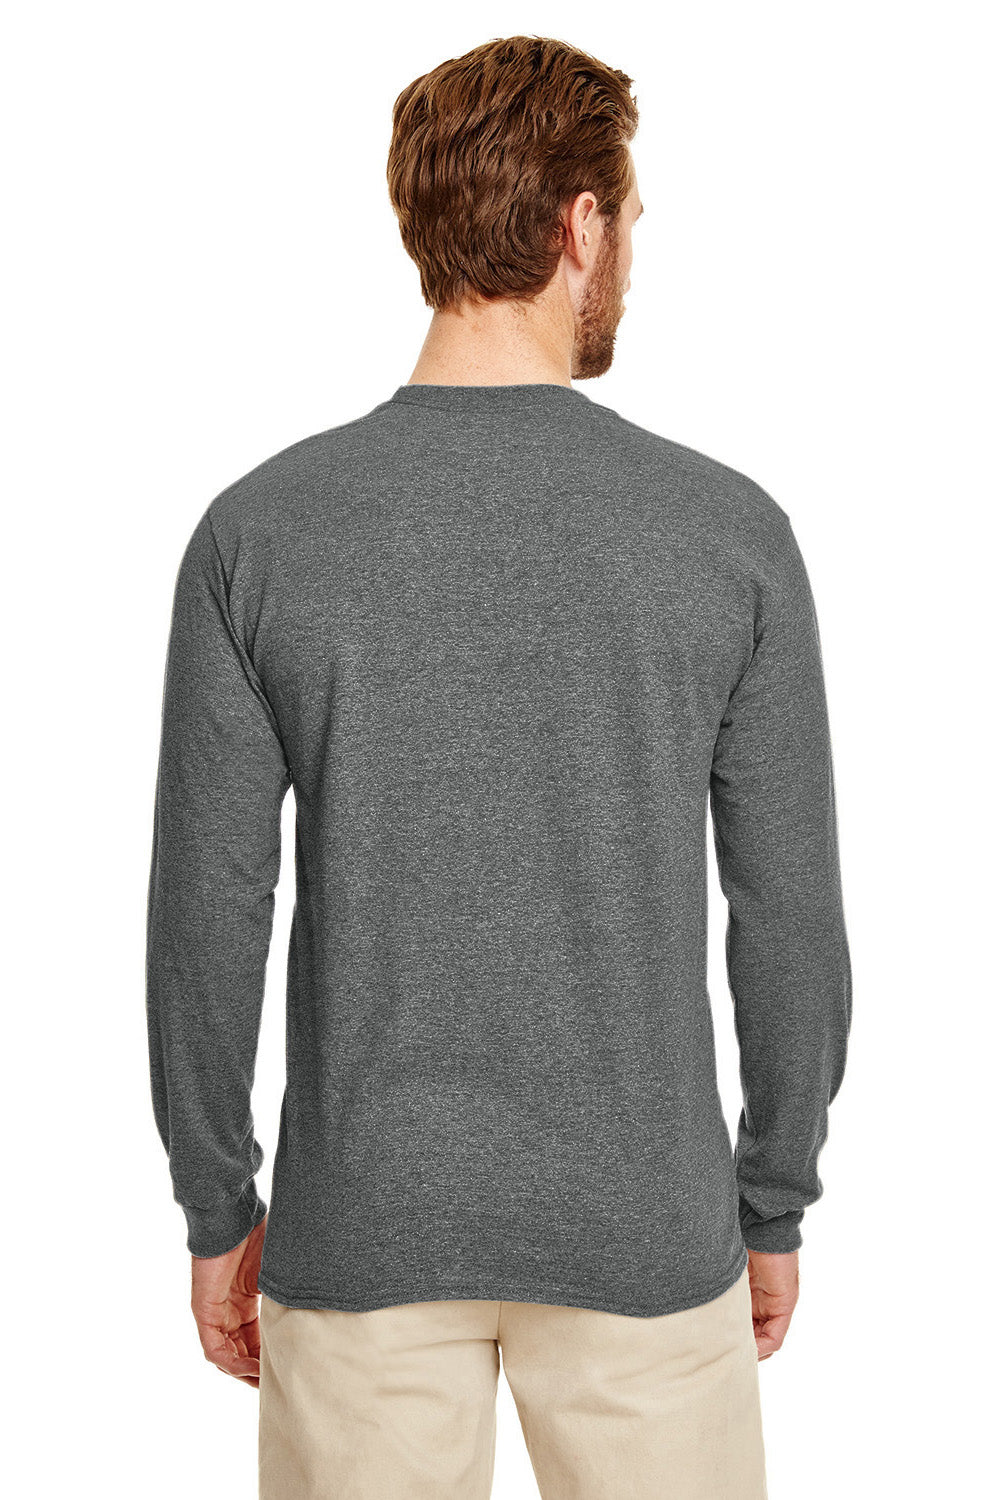 Gildan G840 Mens DryBlend Moisture Wicking Long Sleeve Crewneck T-Shirt Heather Graphite Grey Back